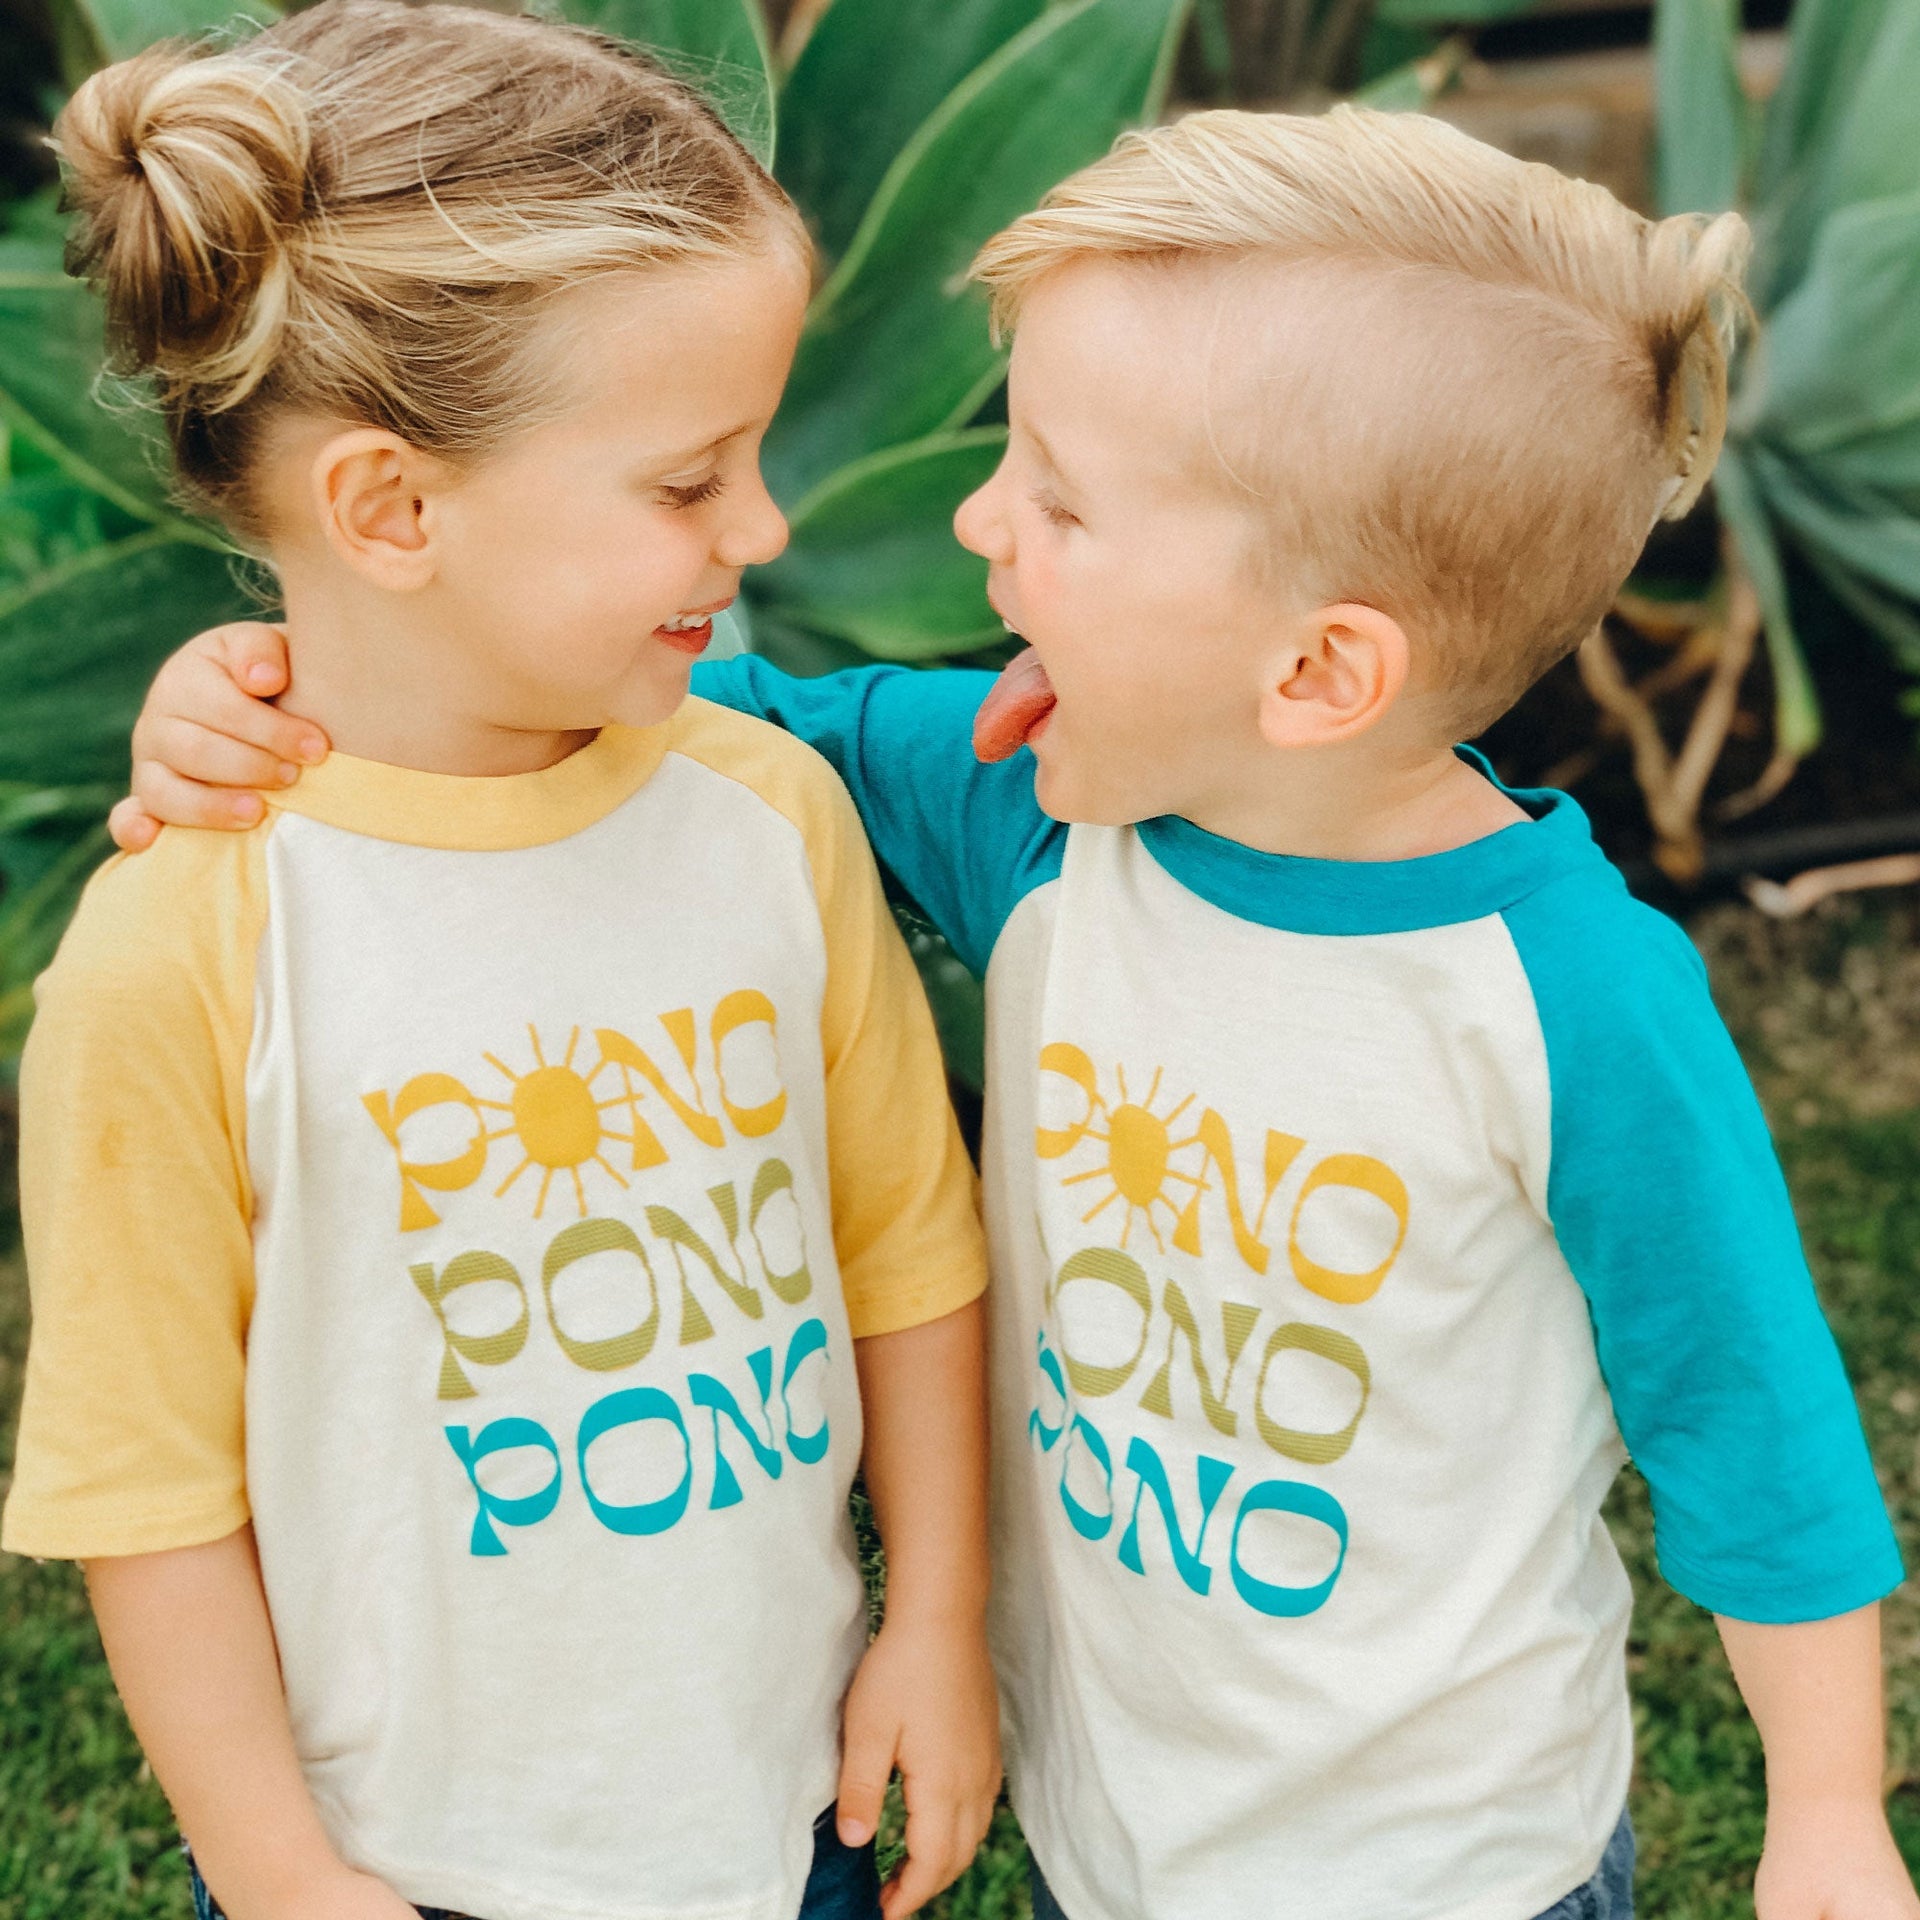 Pono Hawaii teal yellow kids tee design by Nick Kuchar